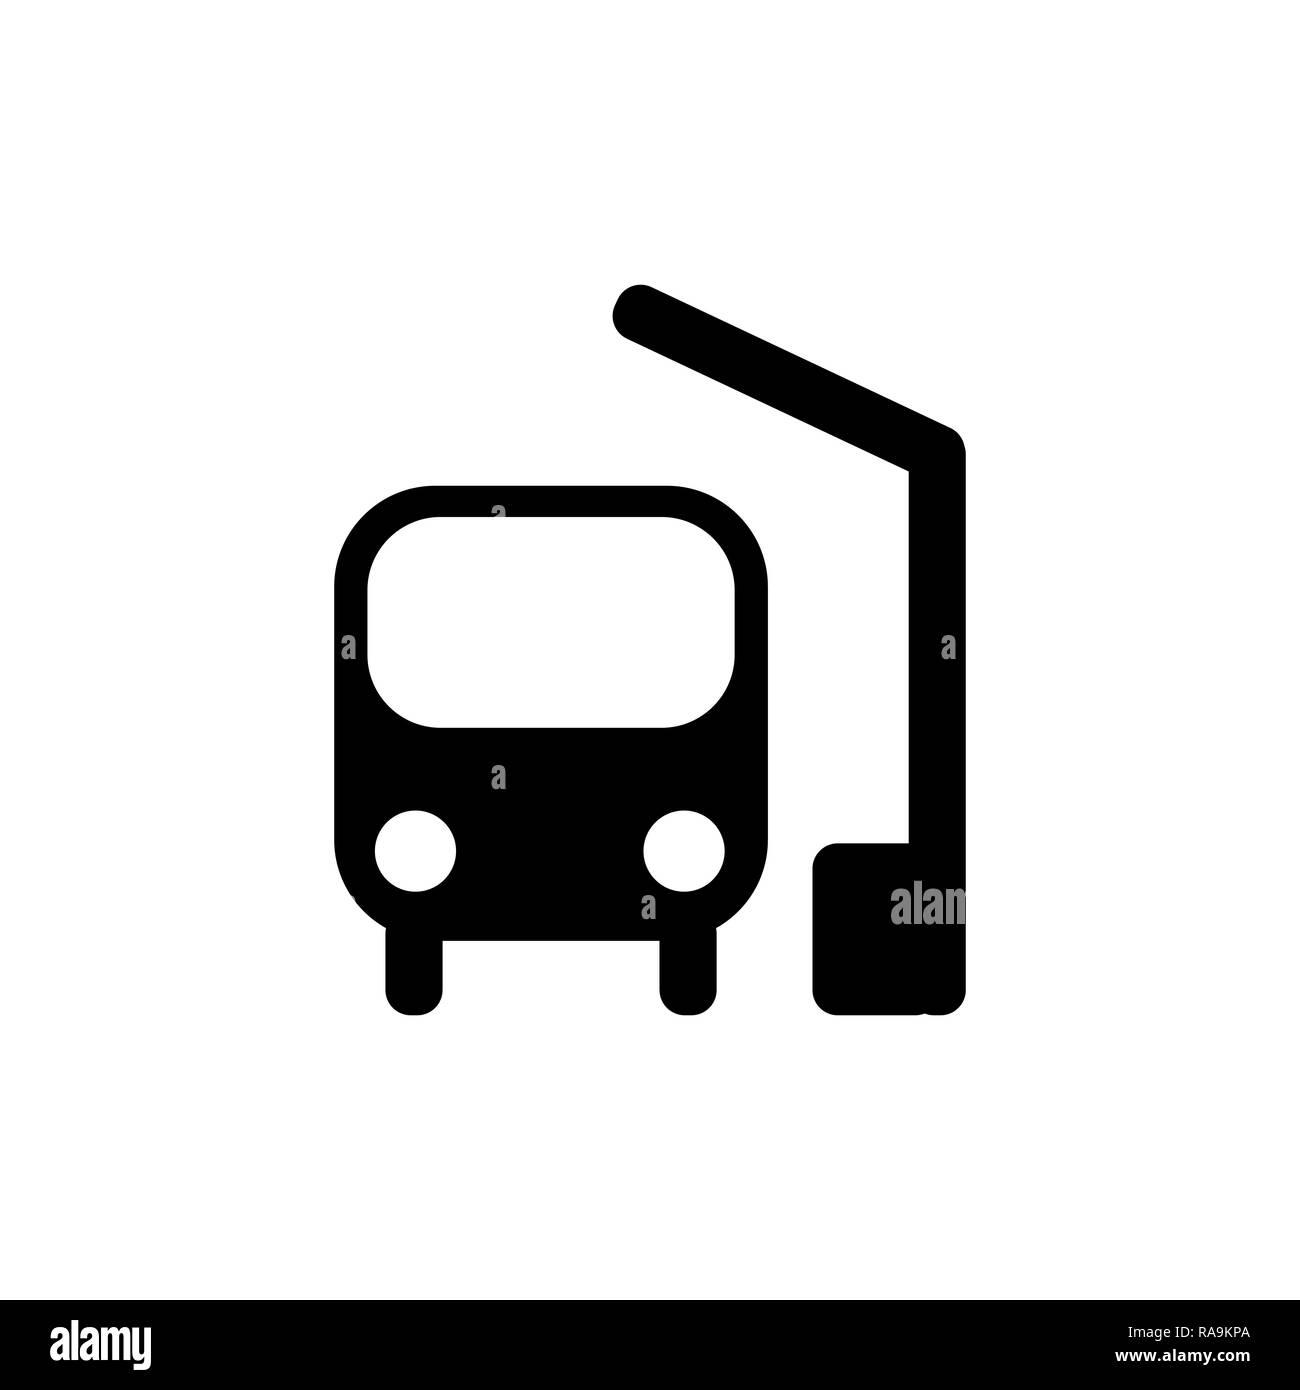 Bus station icon in black, bus symbol Stock Vector